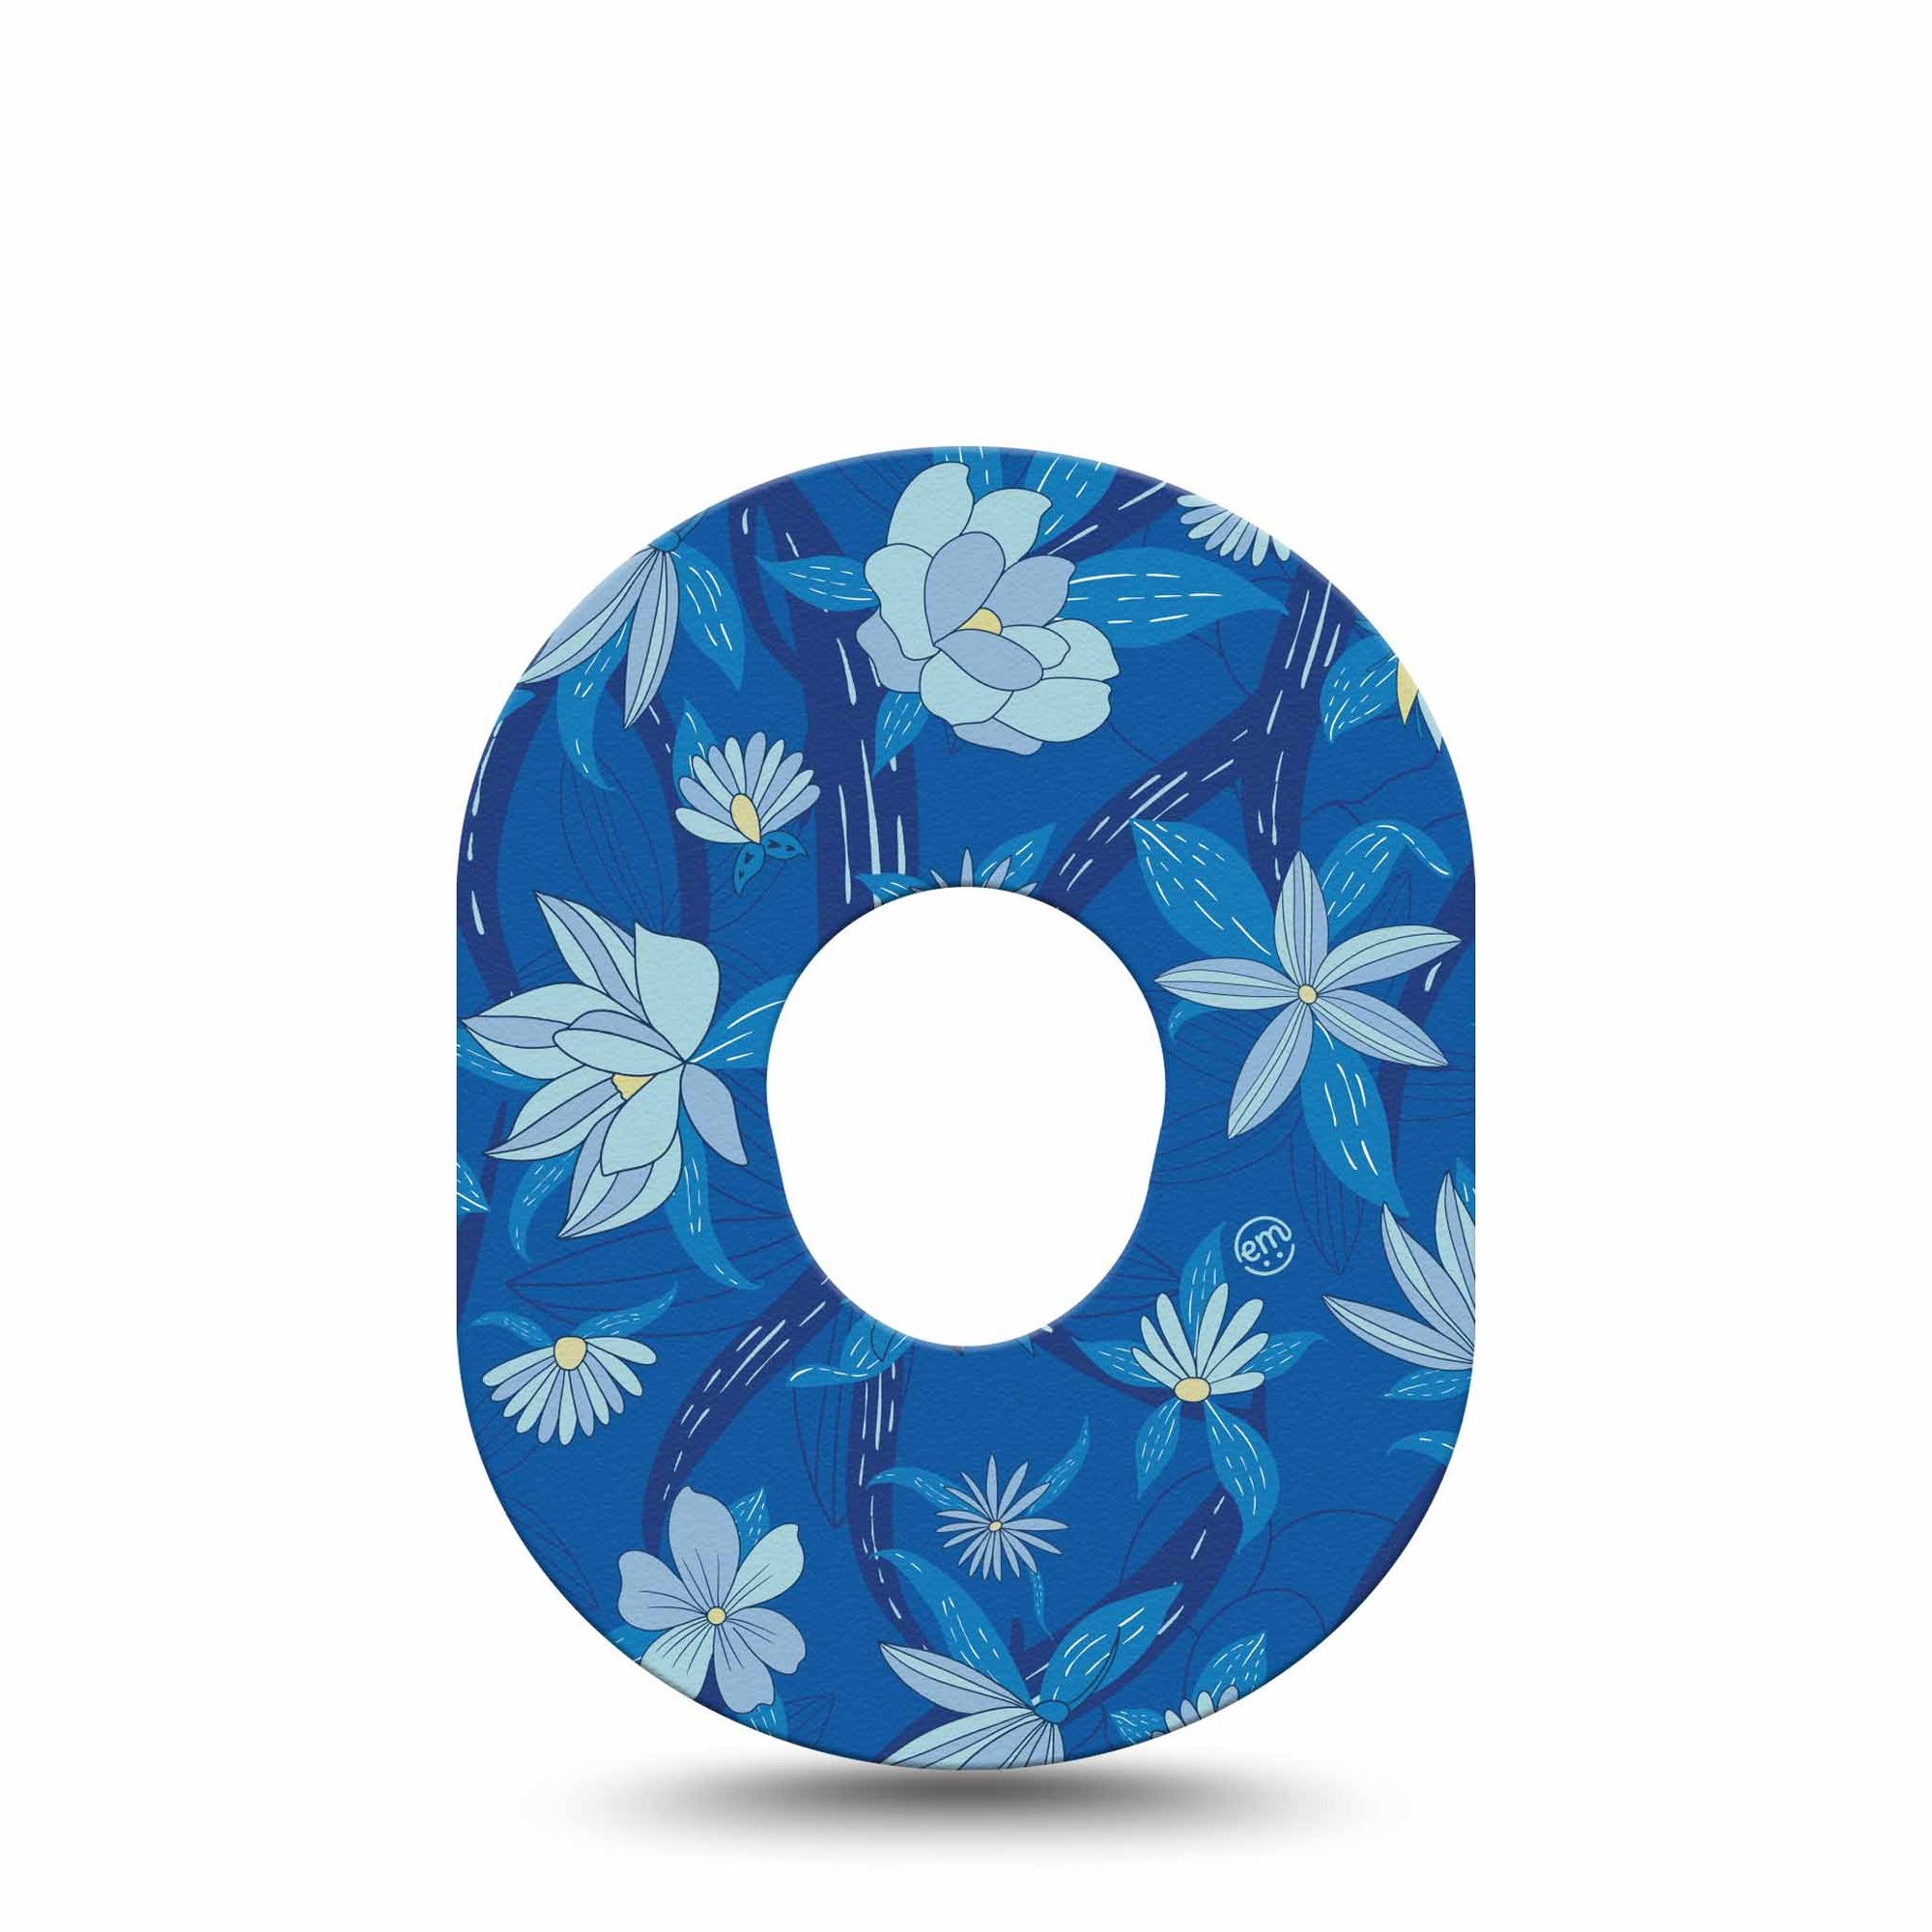 Bold Blue Flowers Dexcom G7 Tape, Single, Calming Blue Florals Themed, CGM Adhesive Patch Design, Dexcom Stelo Glucose Biosensor System